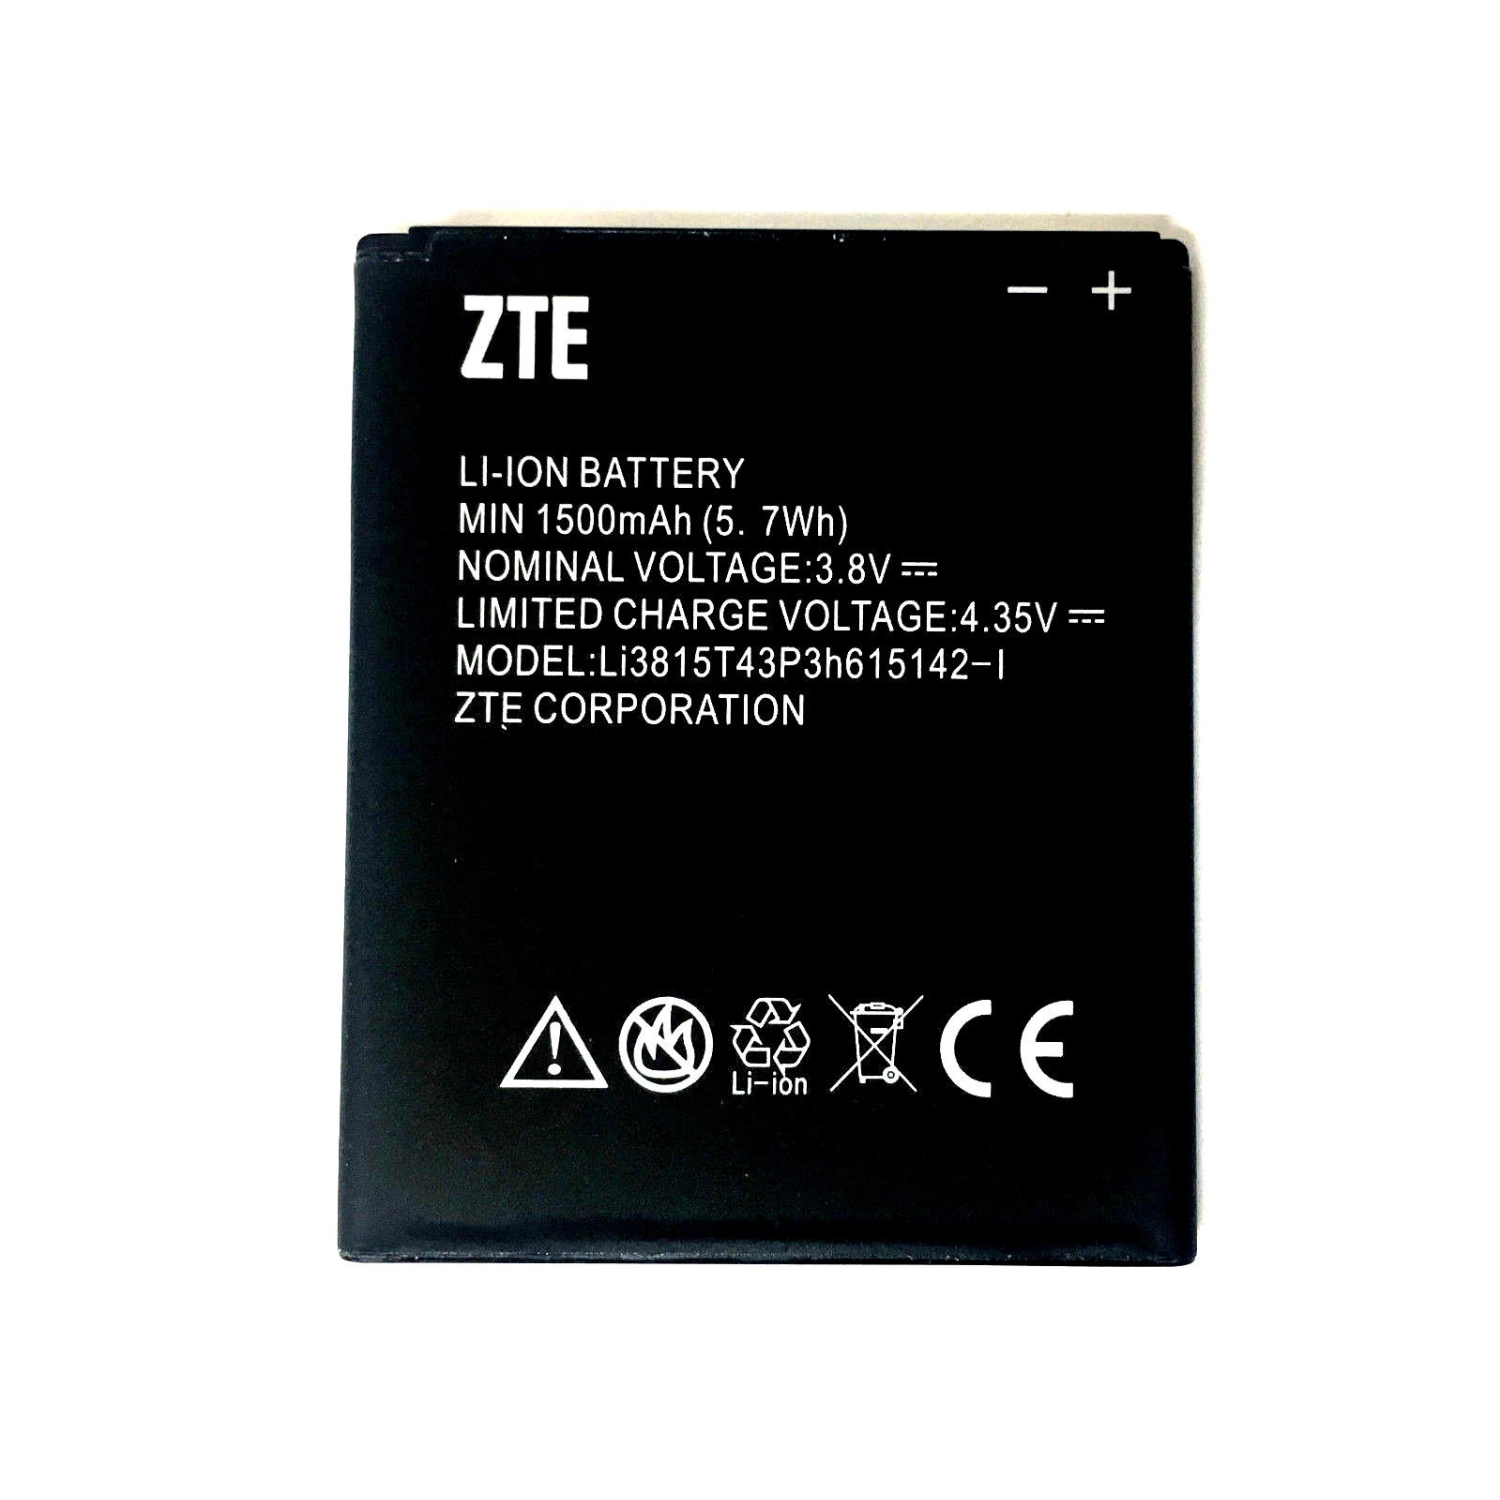 ZTE OEM Li-ion Cell Phone Battery 3.8V MIN 1500mAh 5. 7Wh Li3815T43P3h615142-I